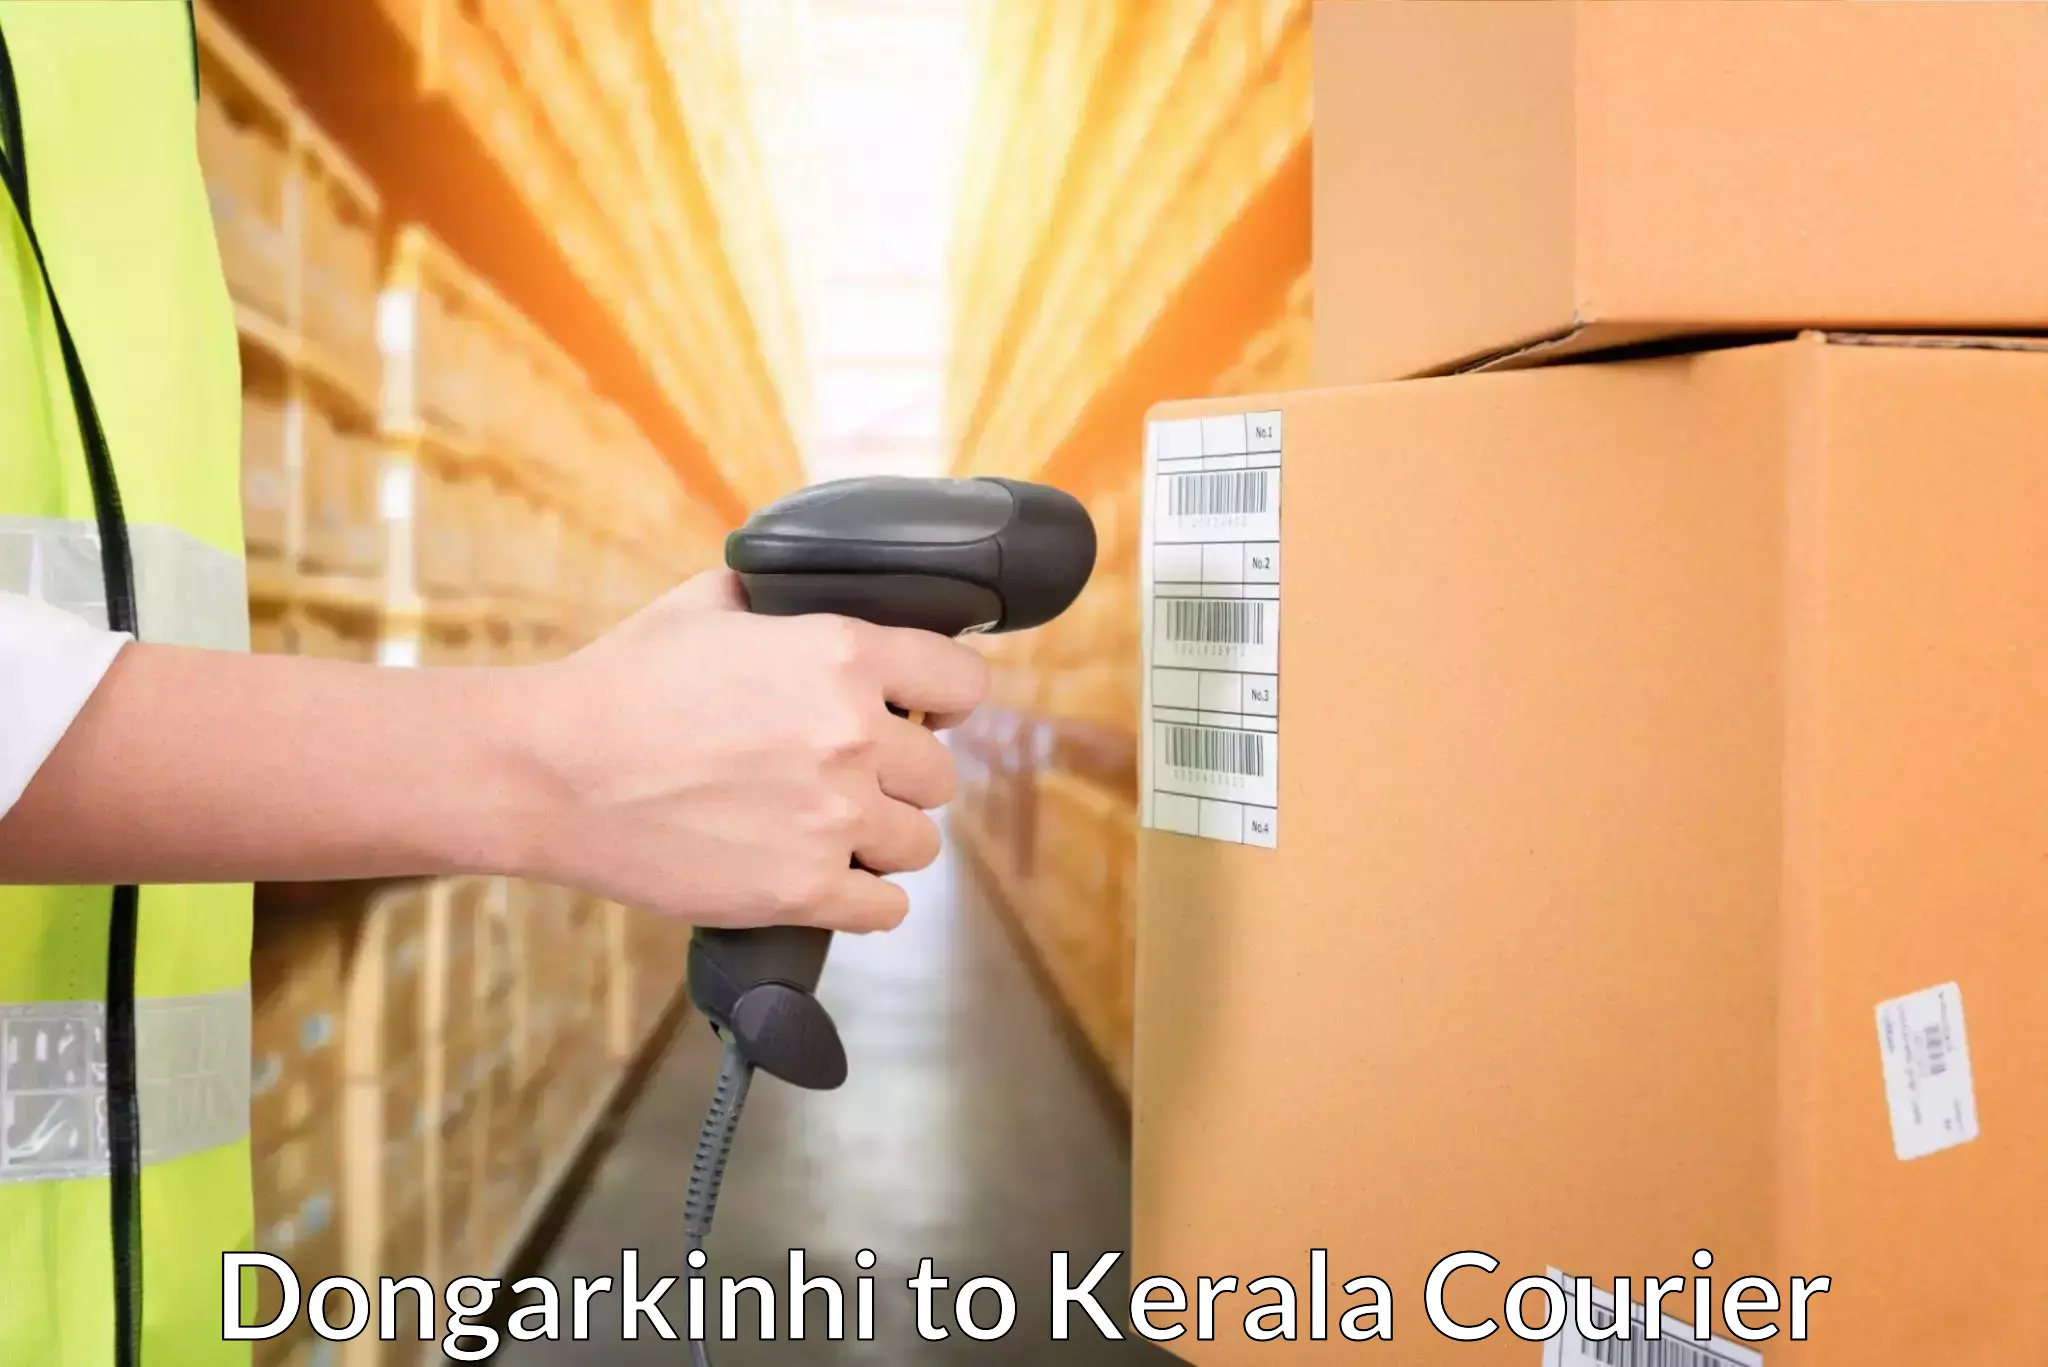 Enhanced tracking features Dongarkinhi to Kerala